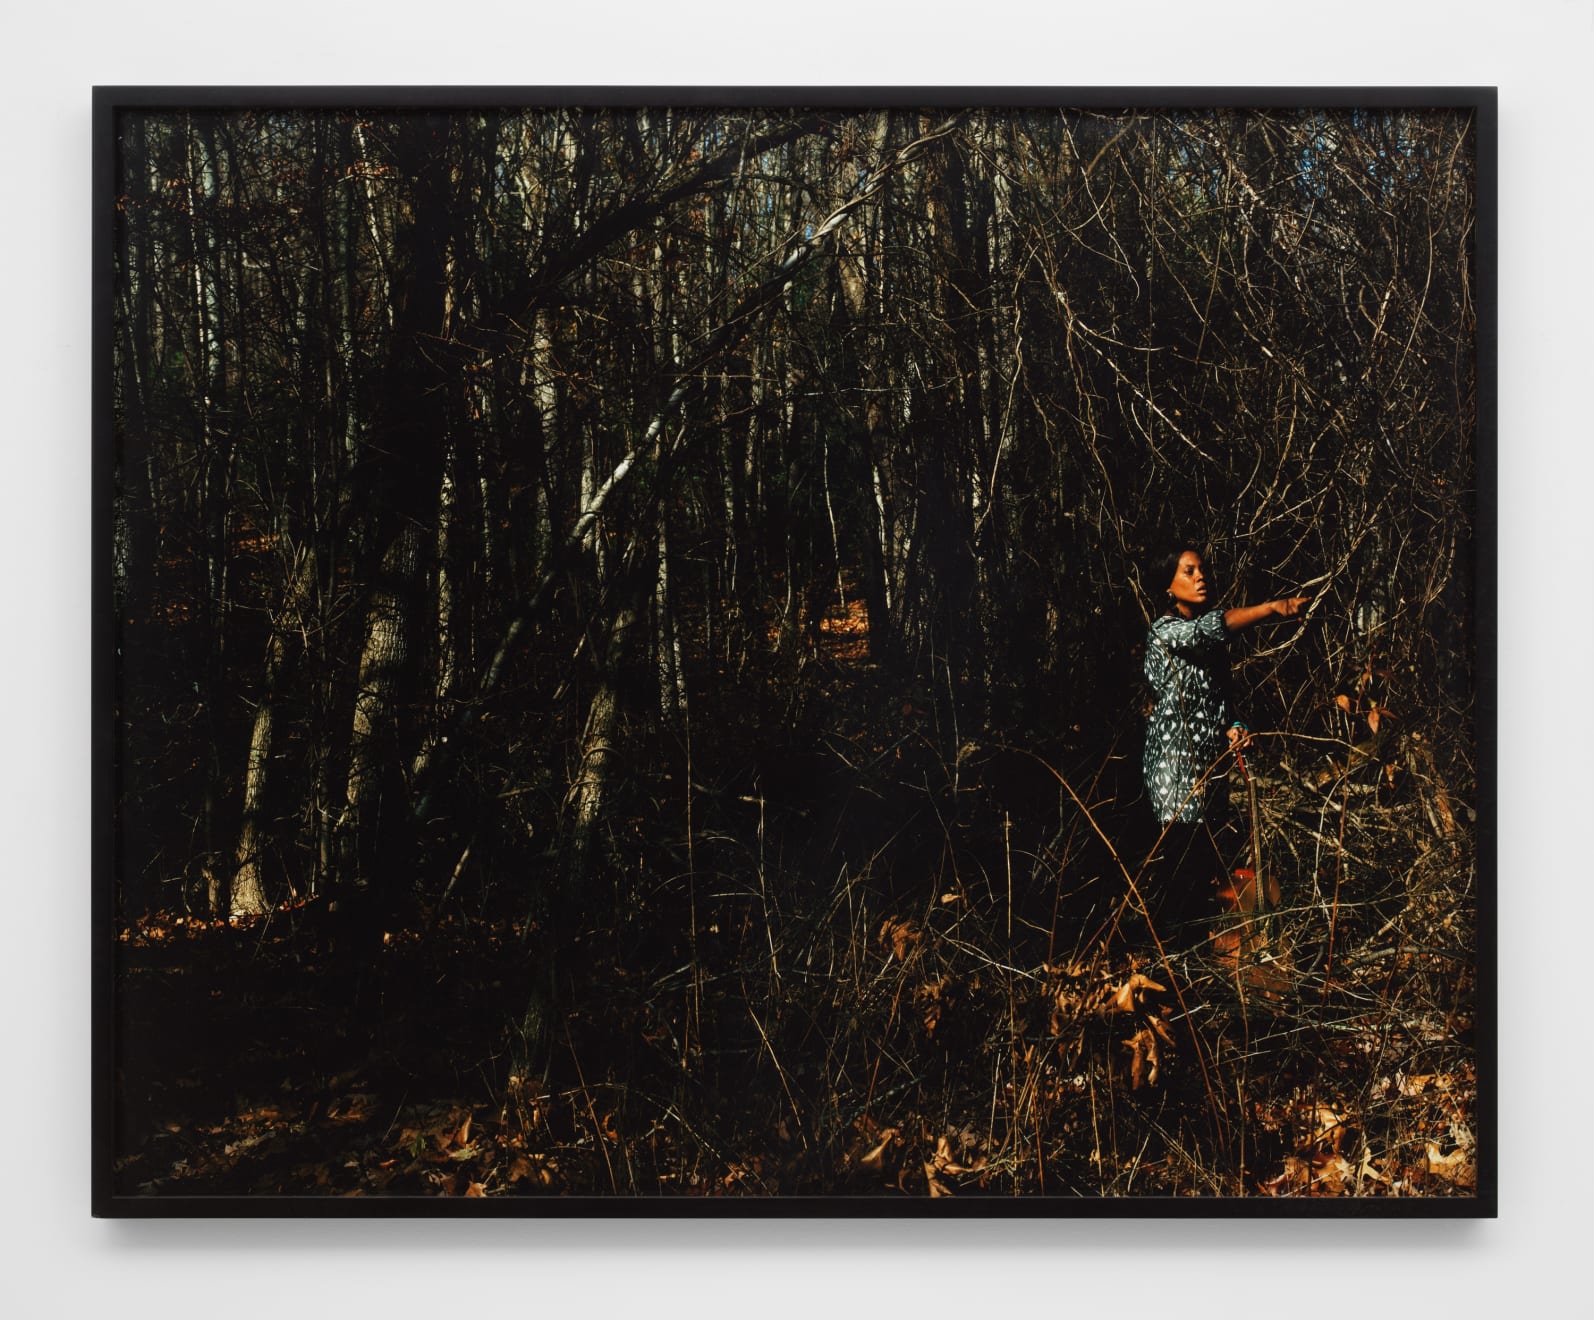 Xaviera Simmons Thundersnow Road, 2010 Chromogenic color print 41 1/8 x 51 1/8 x 1 3/4 in framed (104.5 x 129.9 x 4.4 cm framed) Edition of 3 (EC 1/1) (XS001)